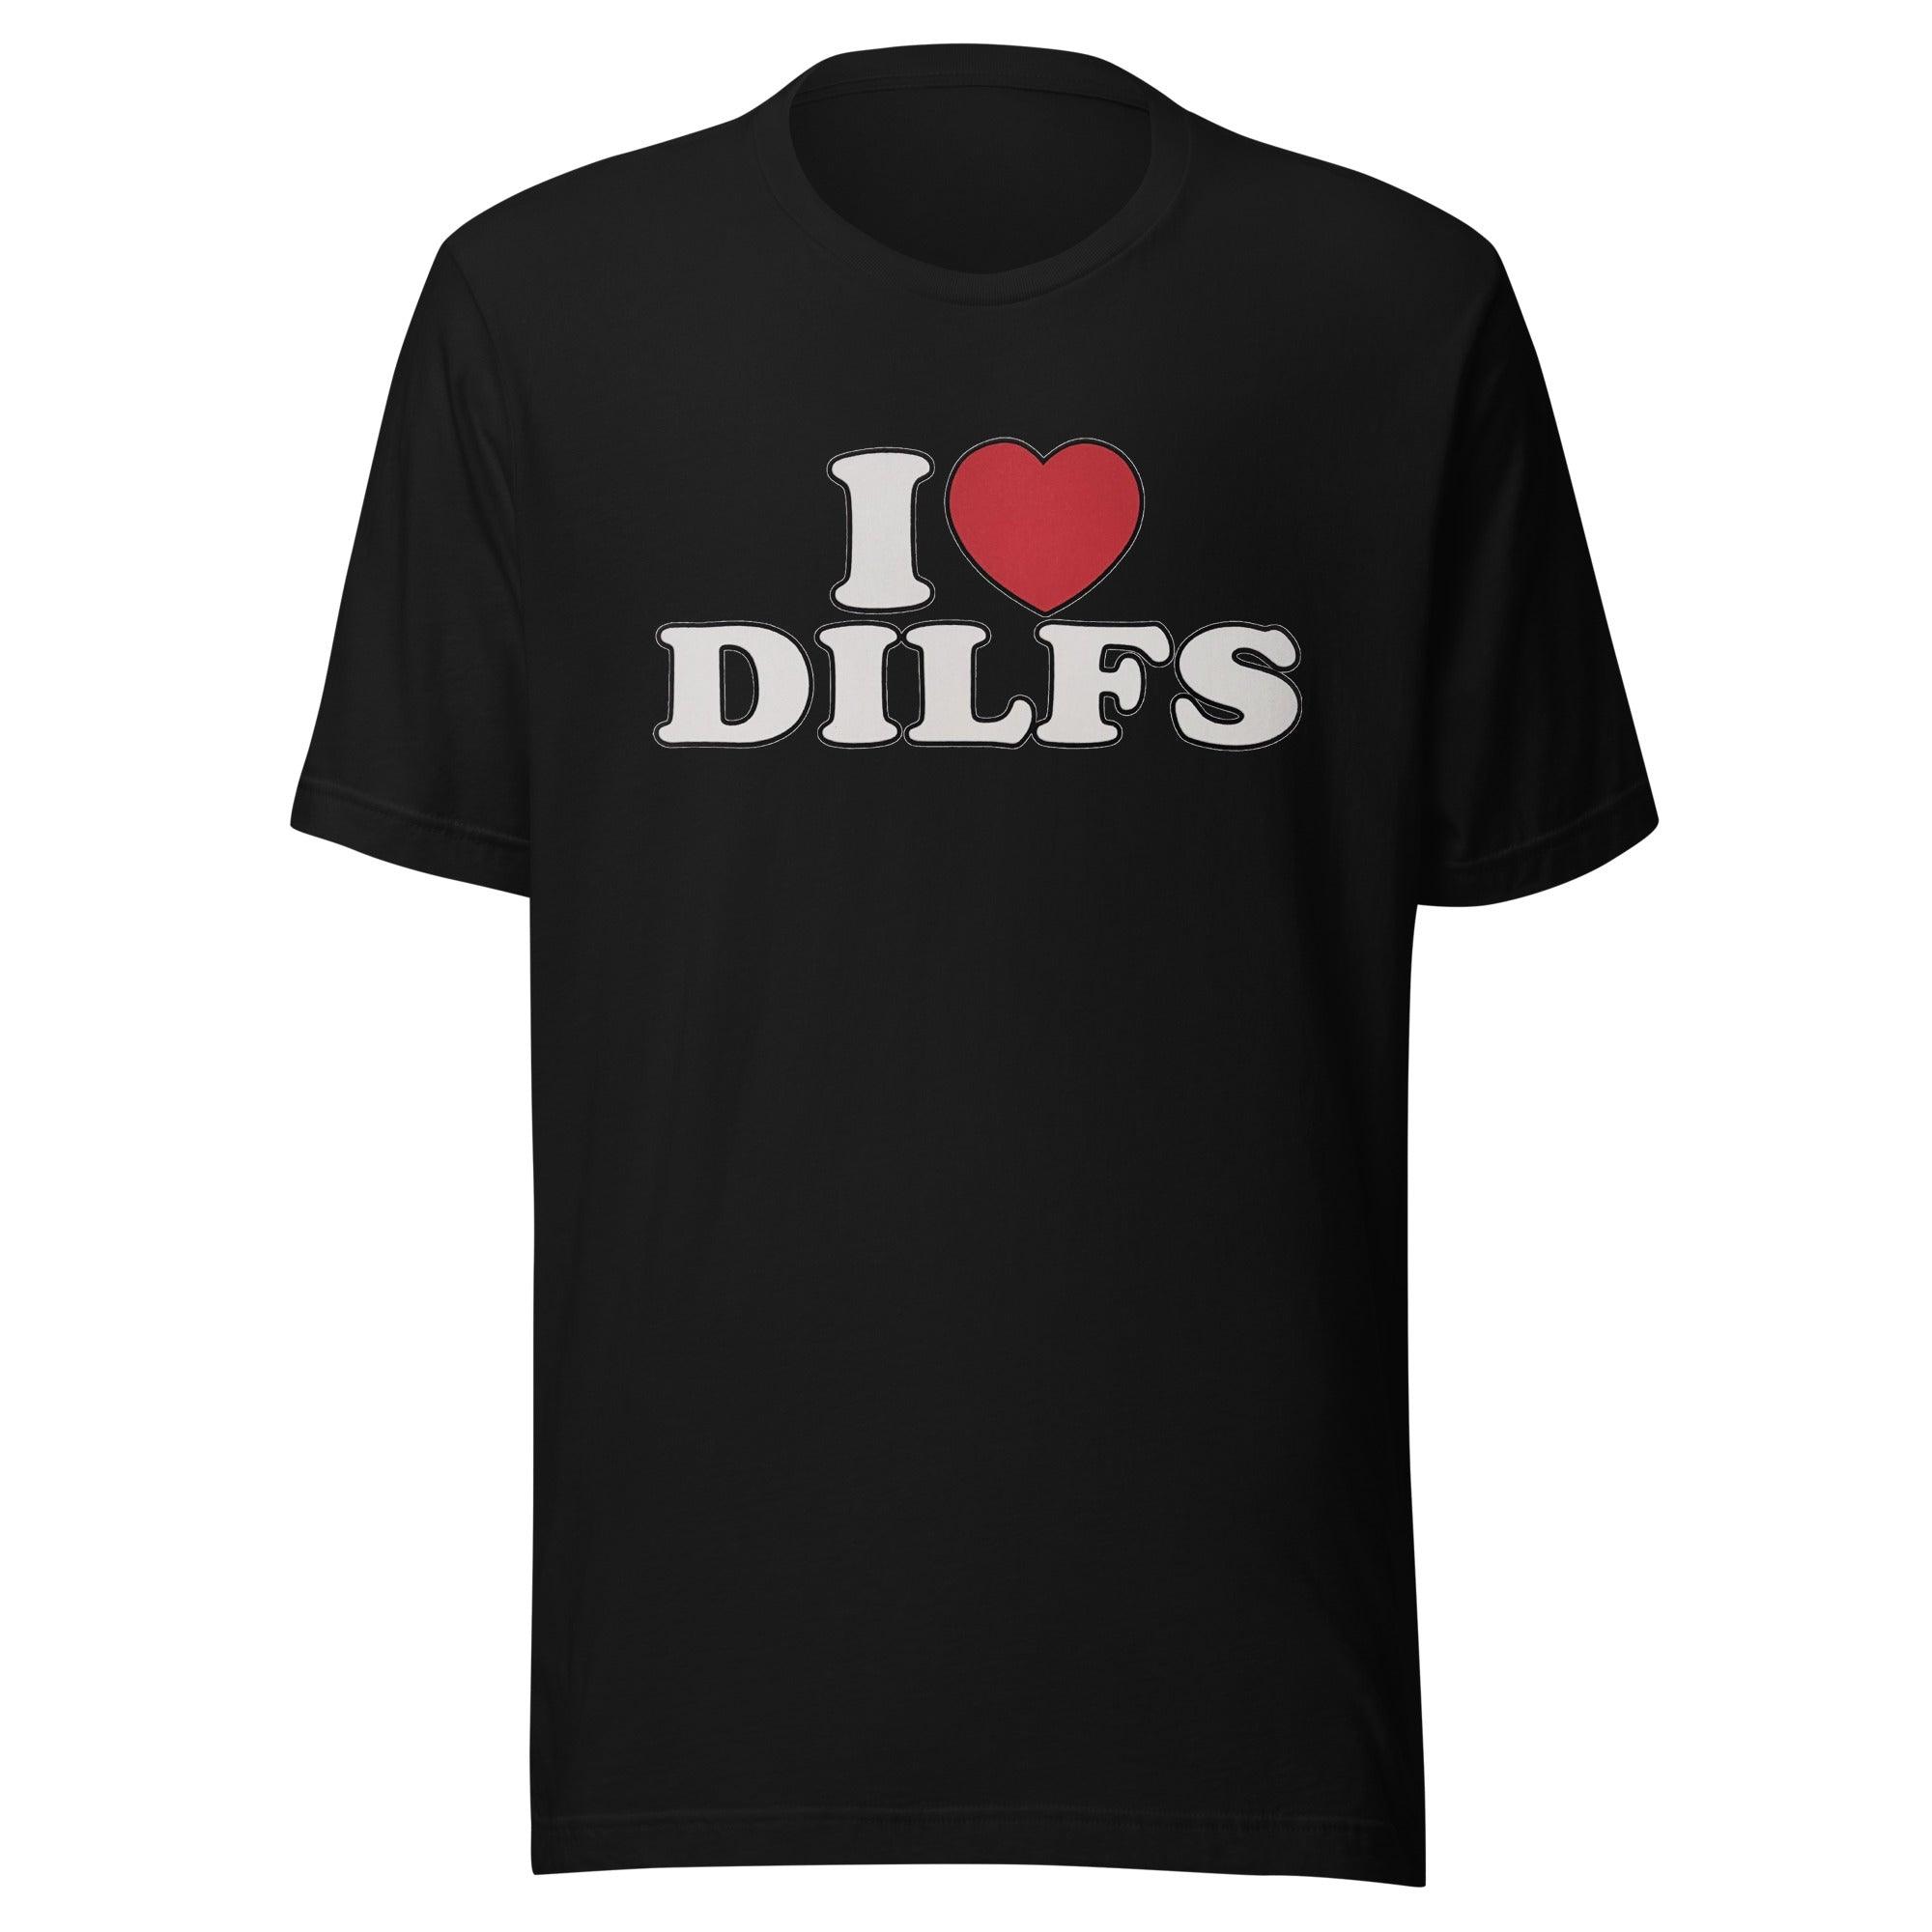 I Love Dilfs with Heart Shaped Love Short Sleeve Unisex Top - TopKoalaTee